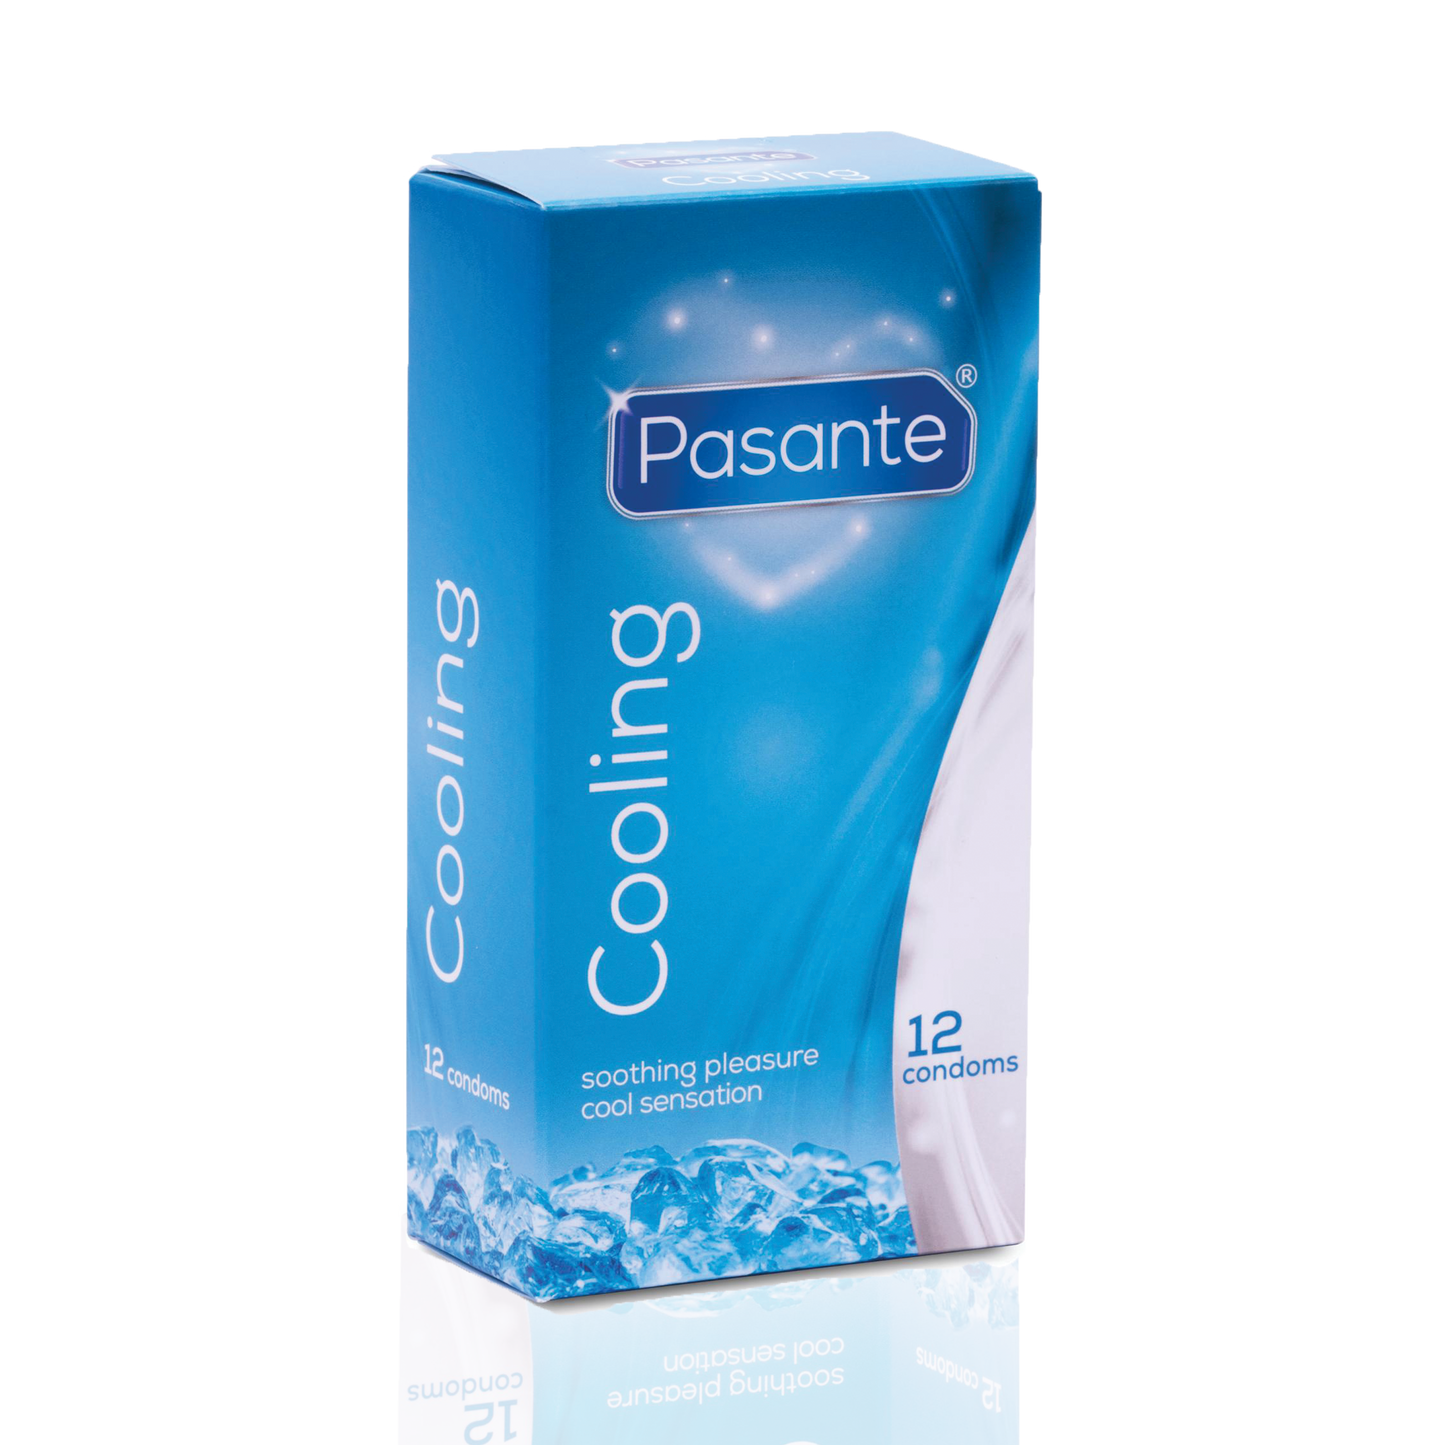 Pasante Cooling Condoms